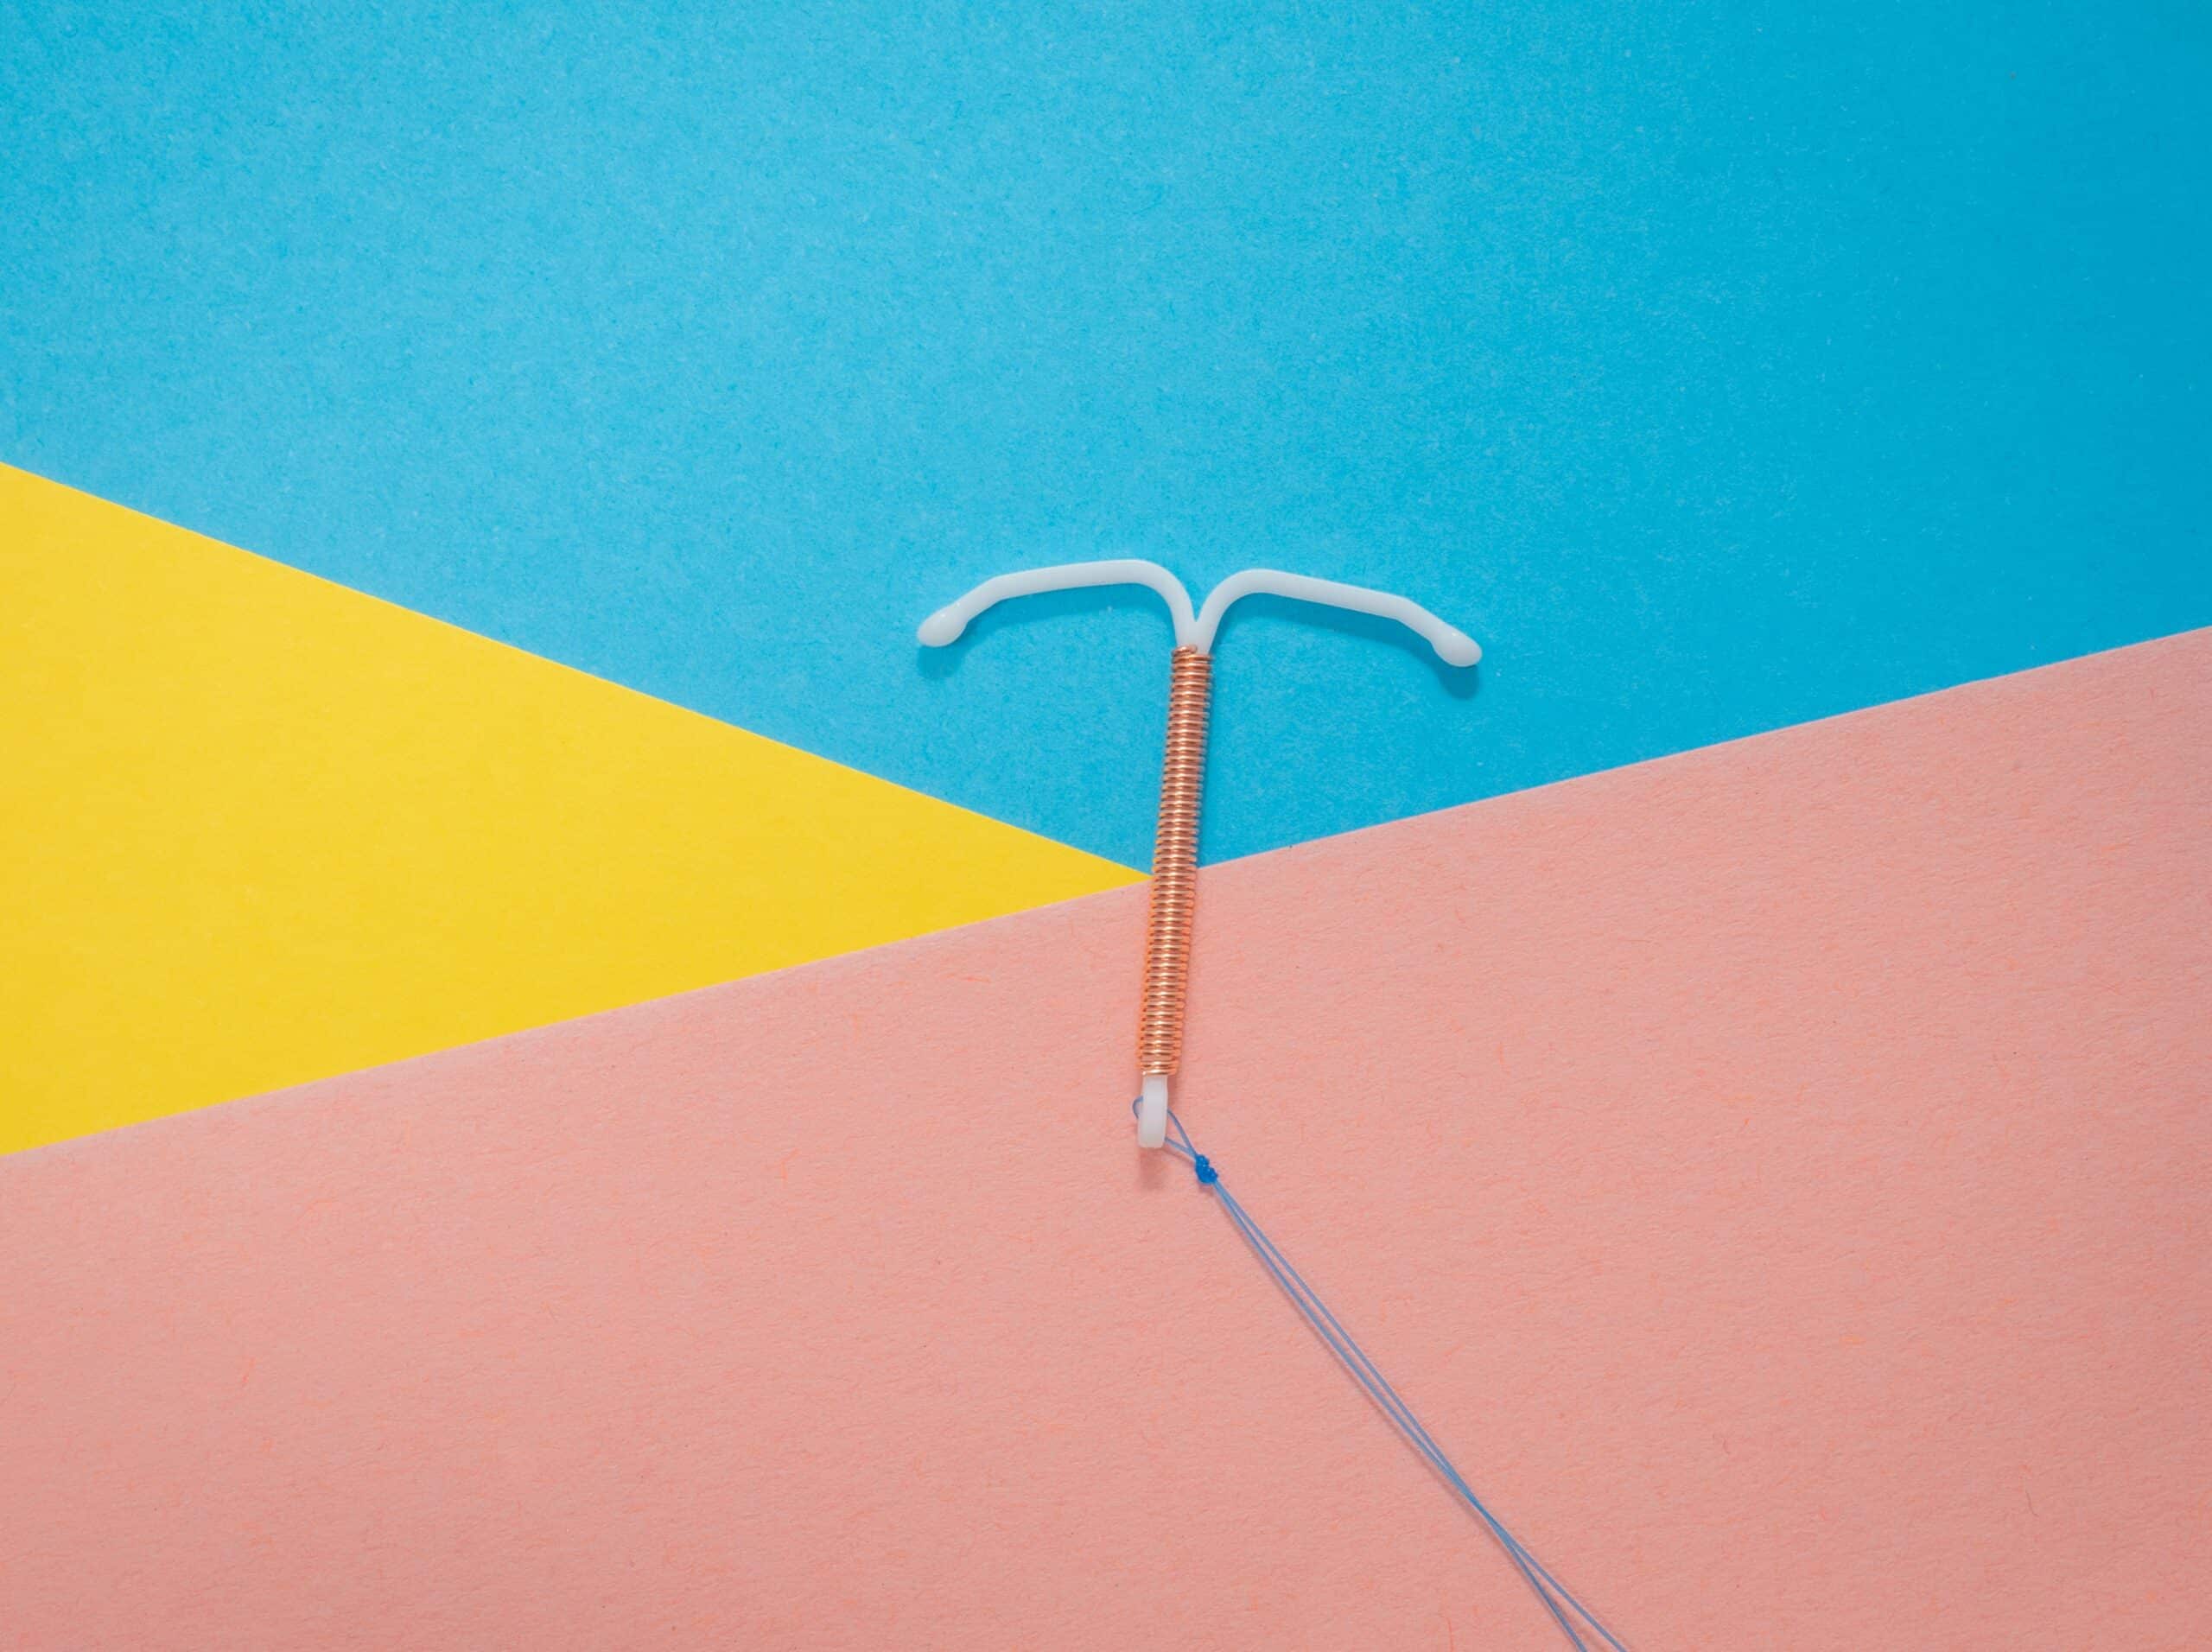 IUD birth control method